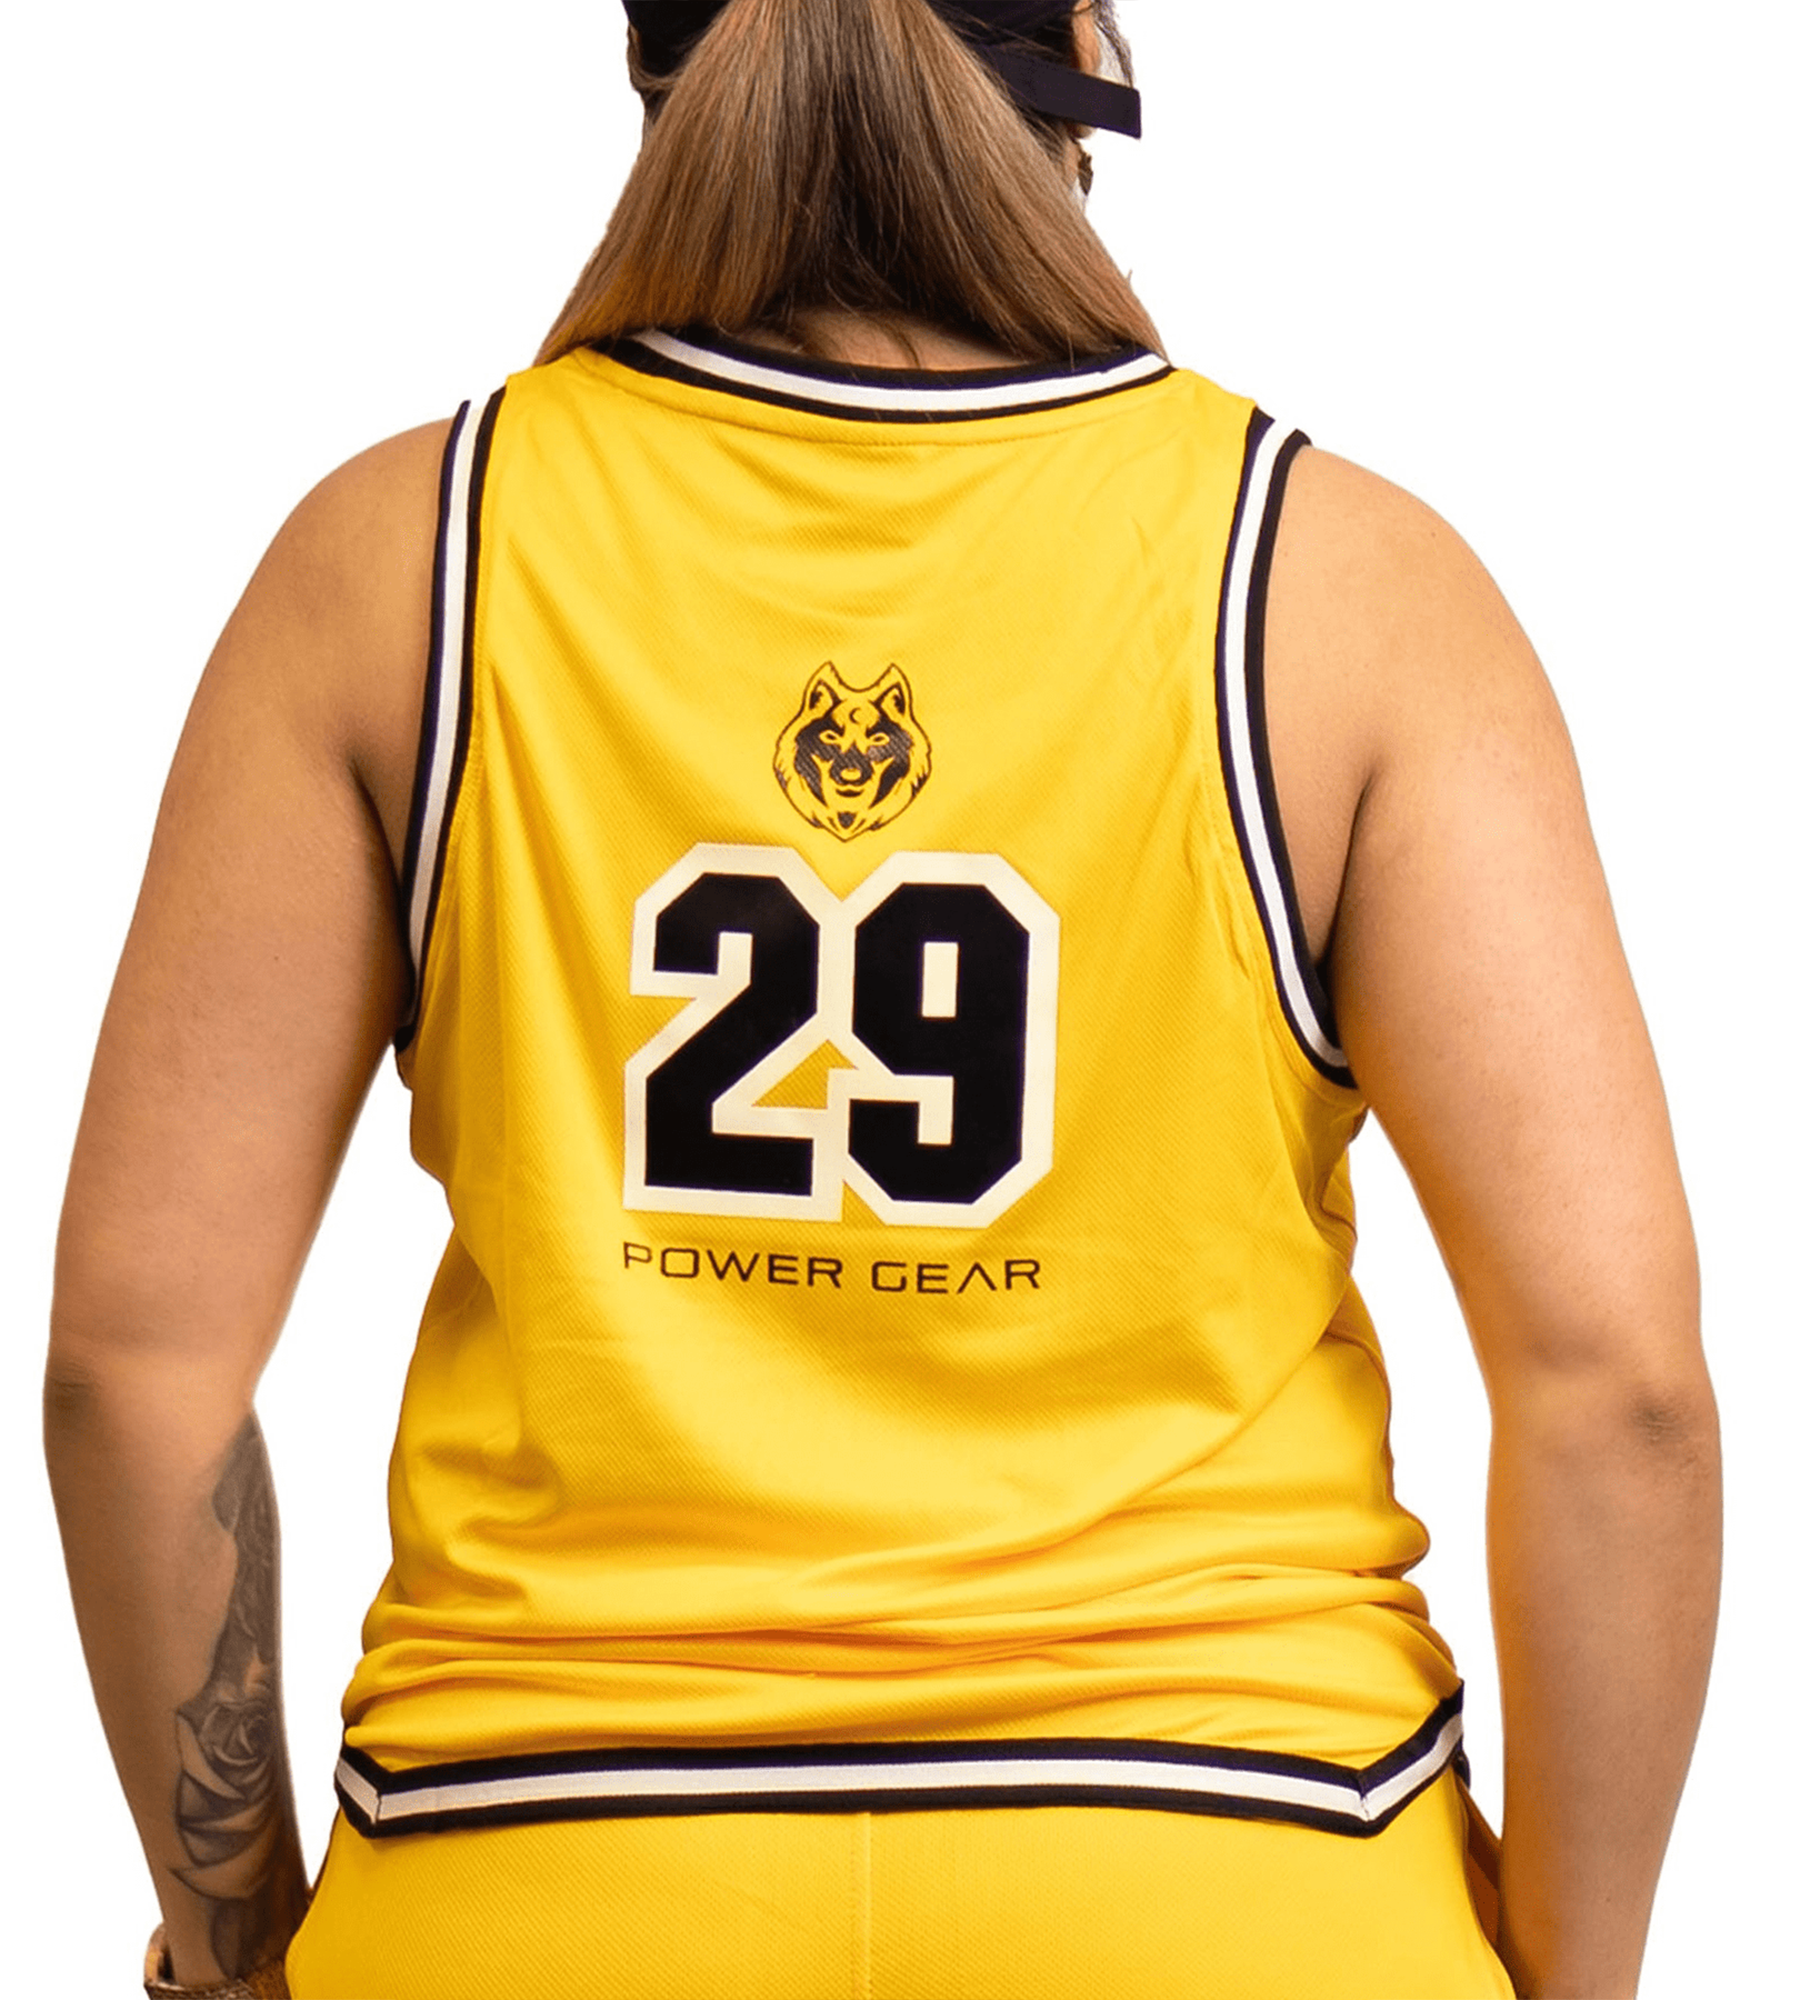 FitnessFox Basketball Singlet -Yellow